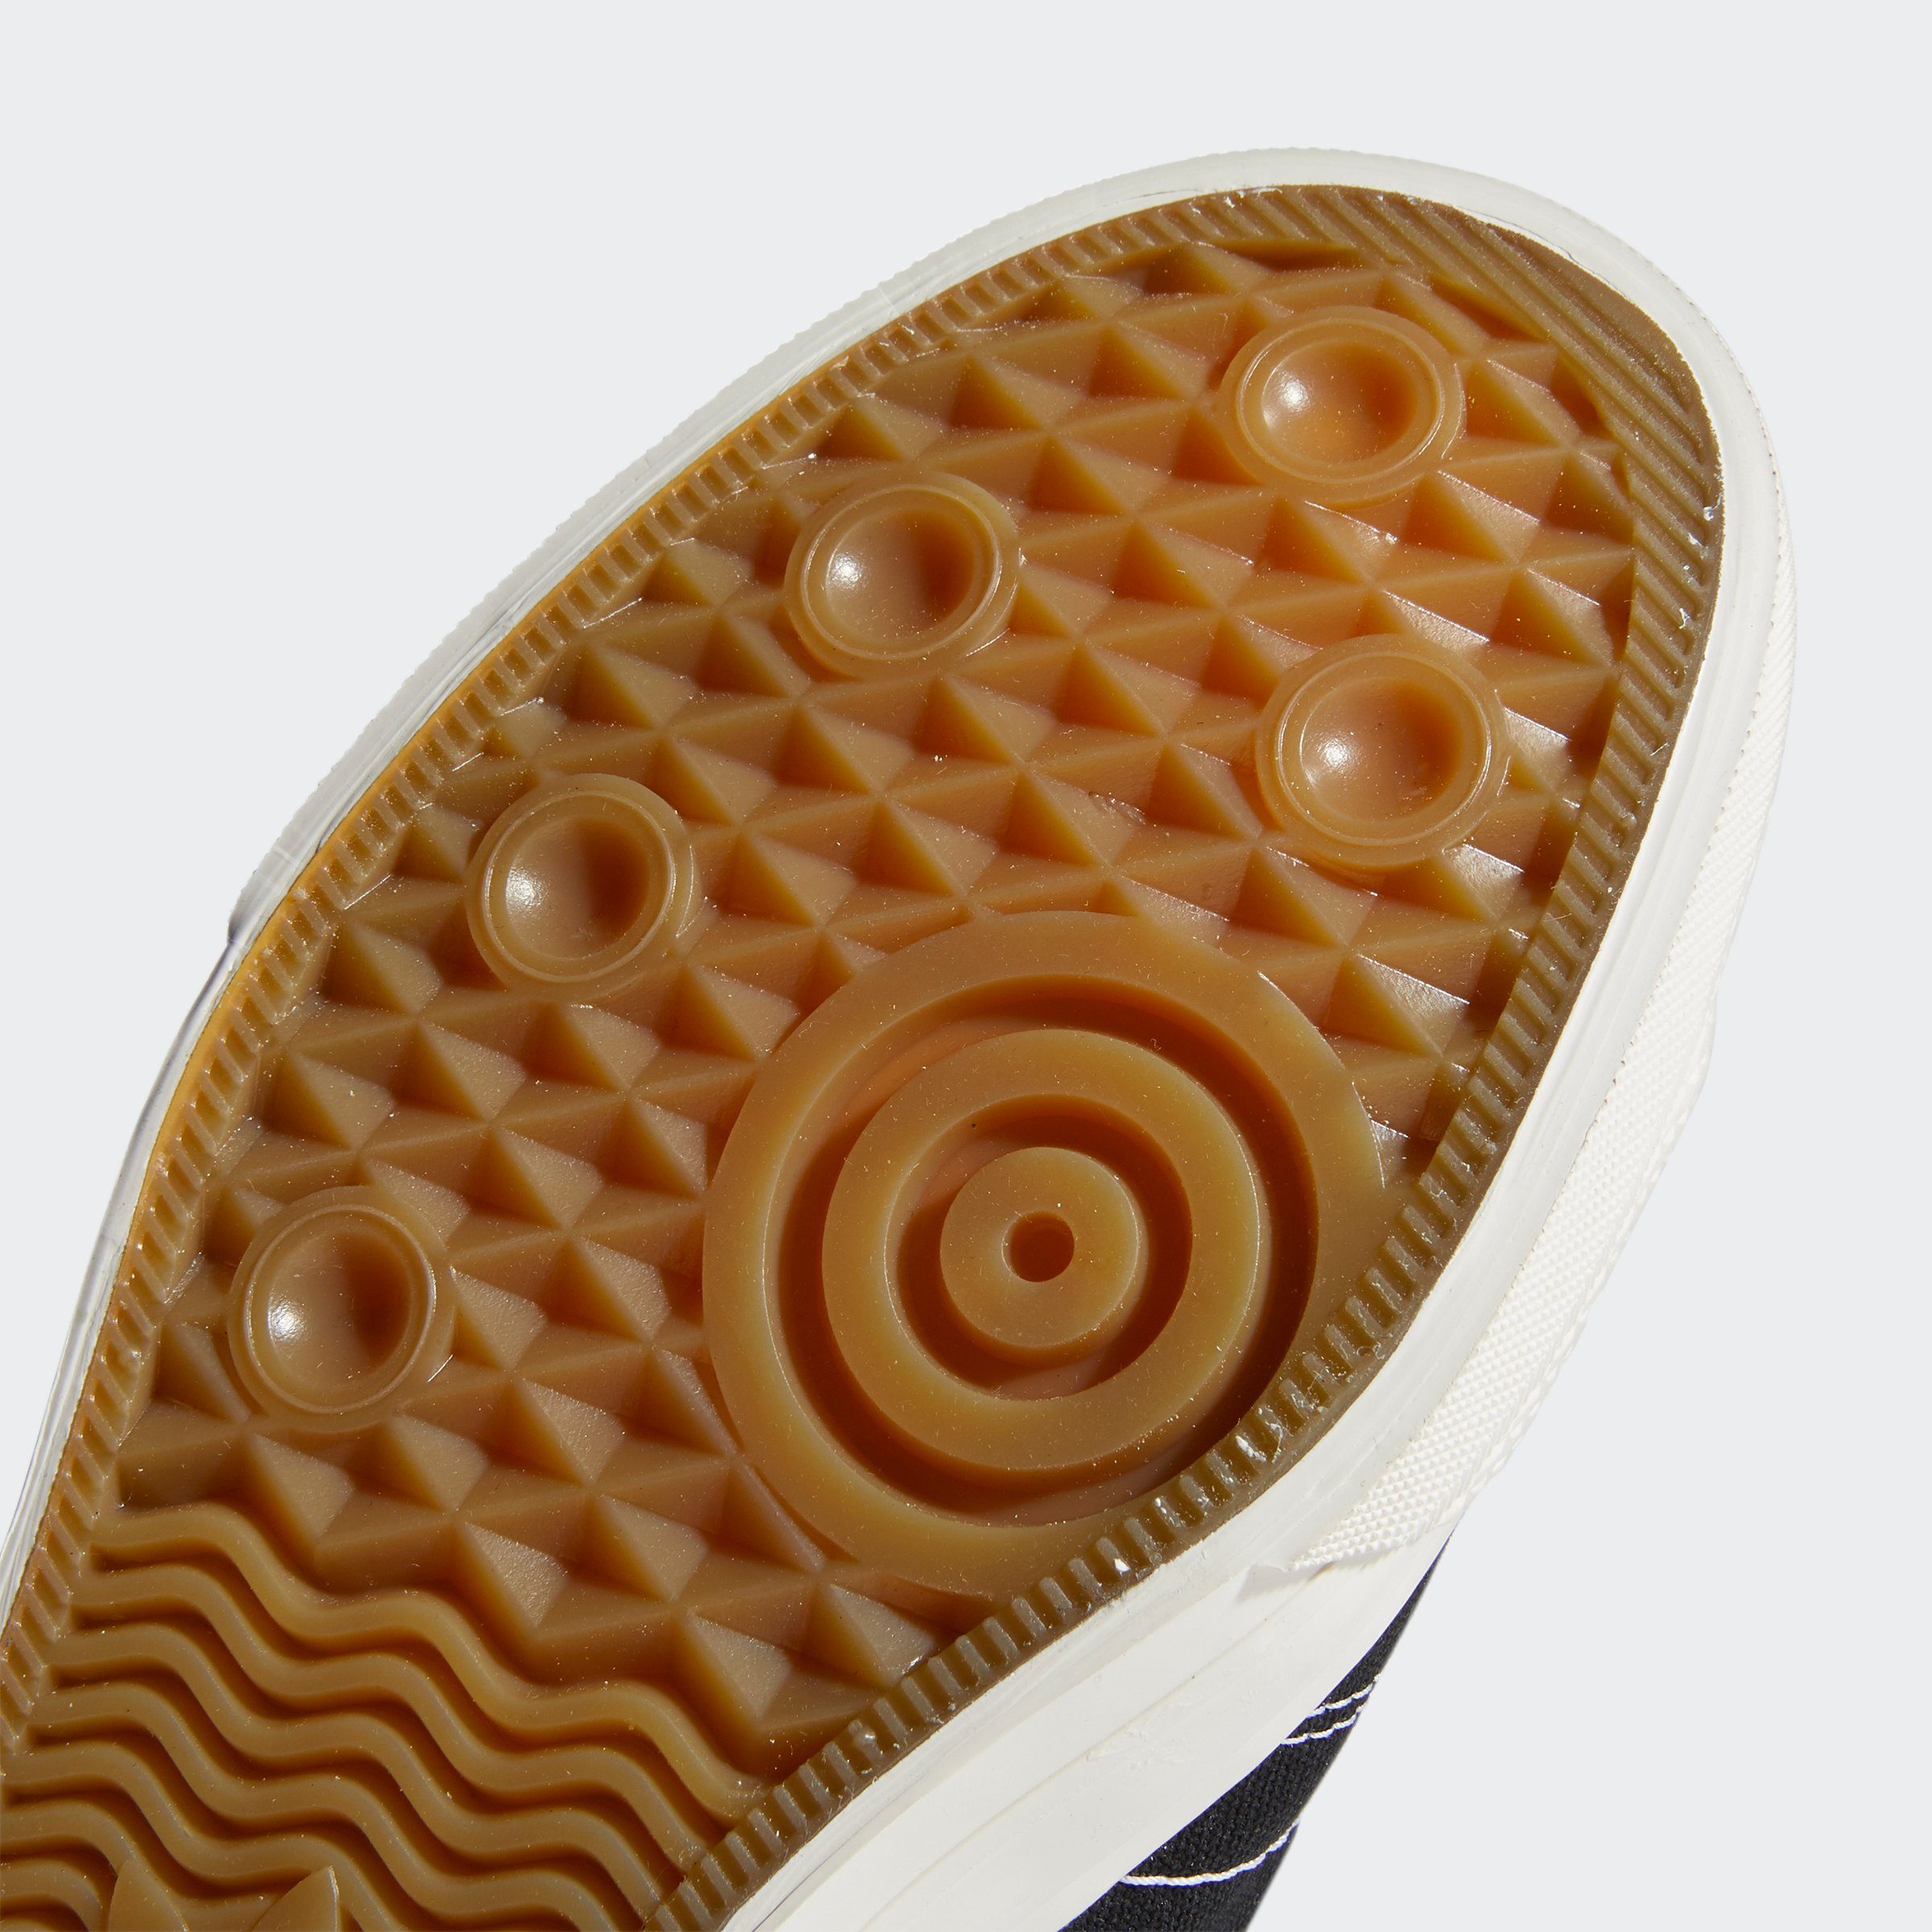 Cloud adidas Originals Core RF / Black / White Off Sneaker NIZZA White